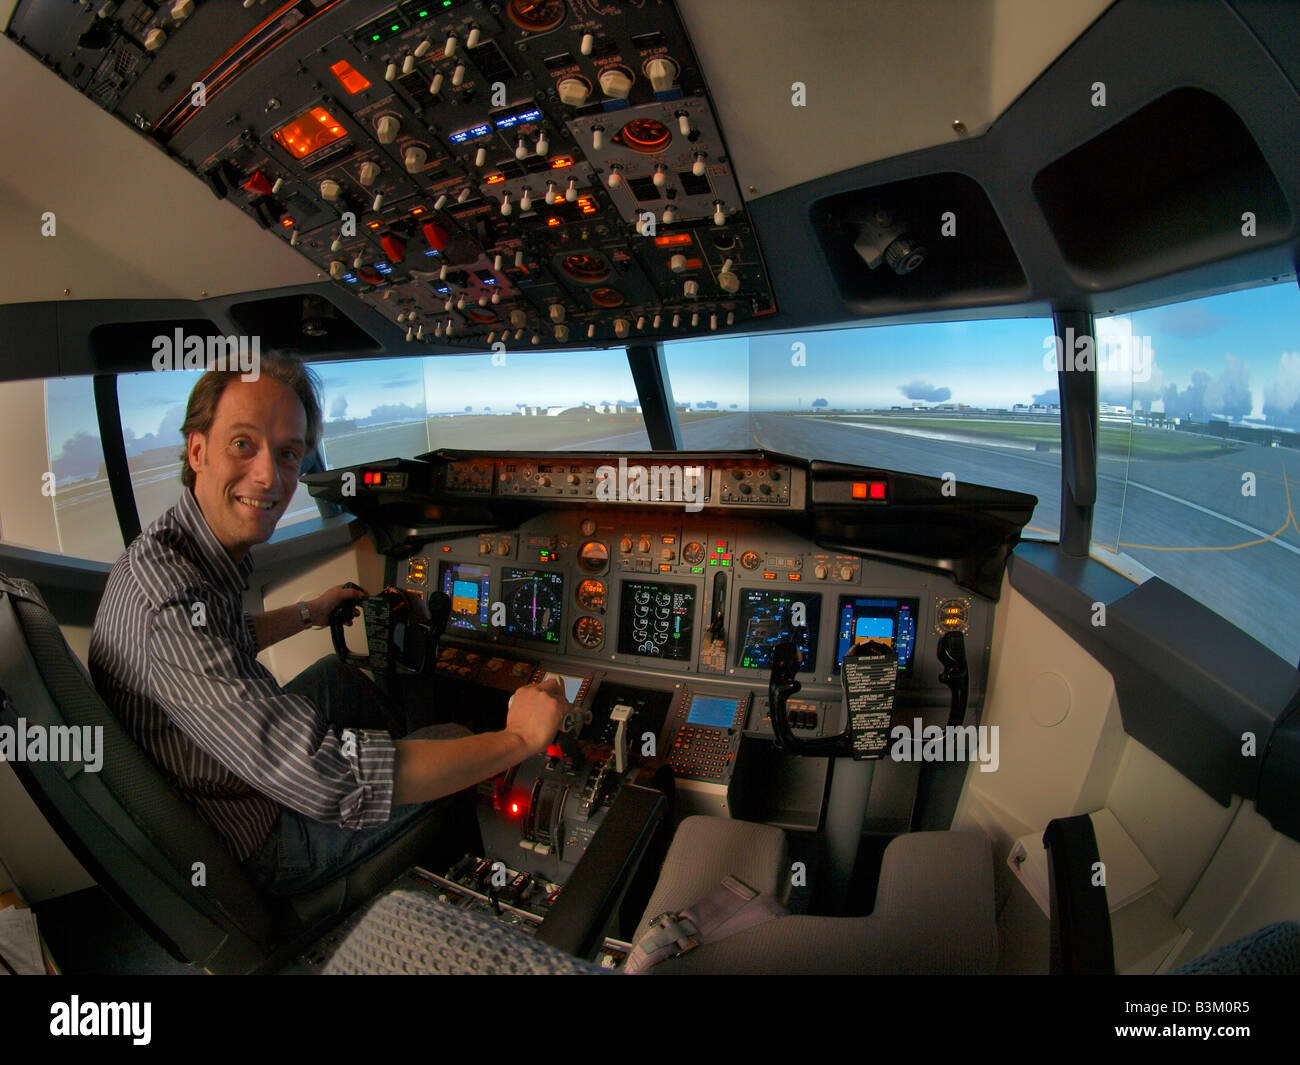 http://c8.alamy.com/comp/B3M0R5/student-in-flight-simulator-boeing-737-cockpit-parked-on-schiphol-B3M0R5.jpg